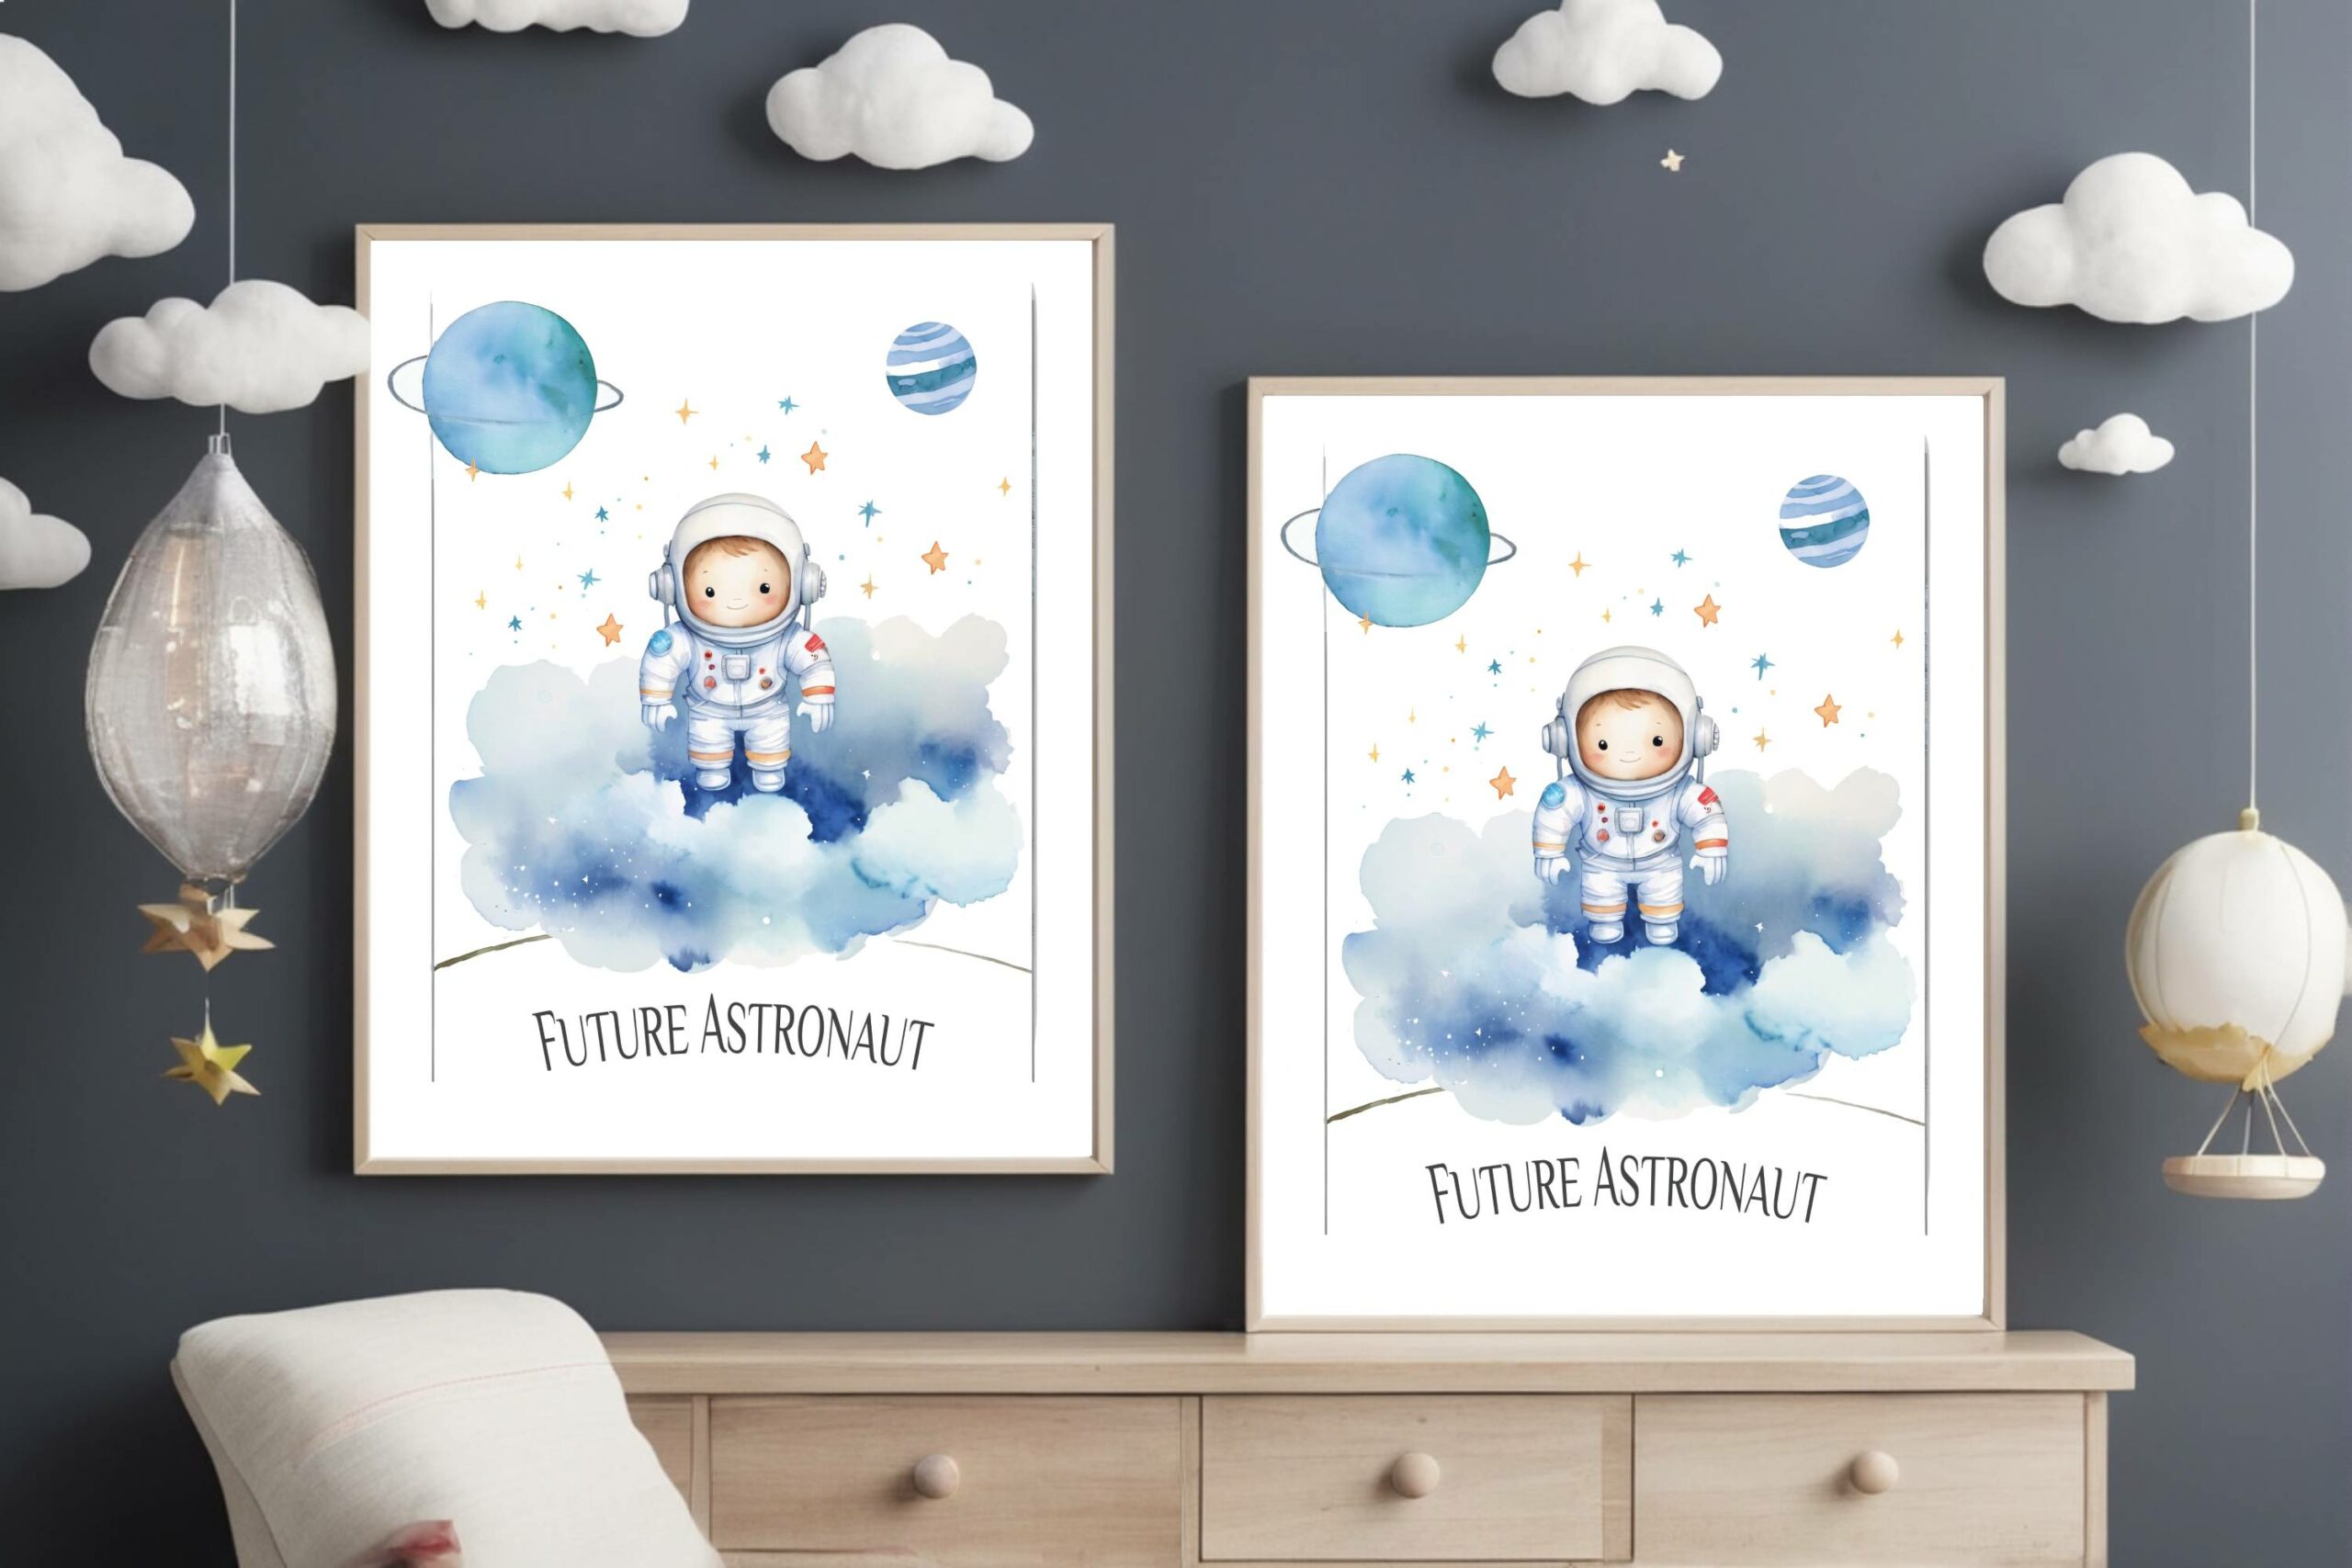 Kids Room Wall Art Space – 1 Unframed Printable Gift 8×10 11×14 16×20 | Future Astronaut Galaxy Game Room Decor | Nursery Wall Art Digital